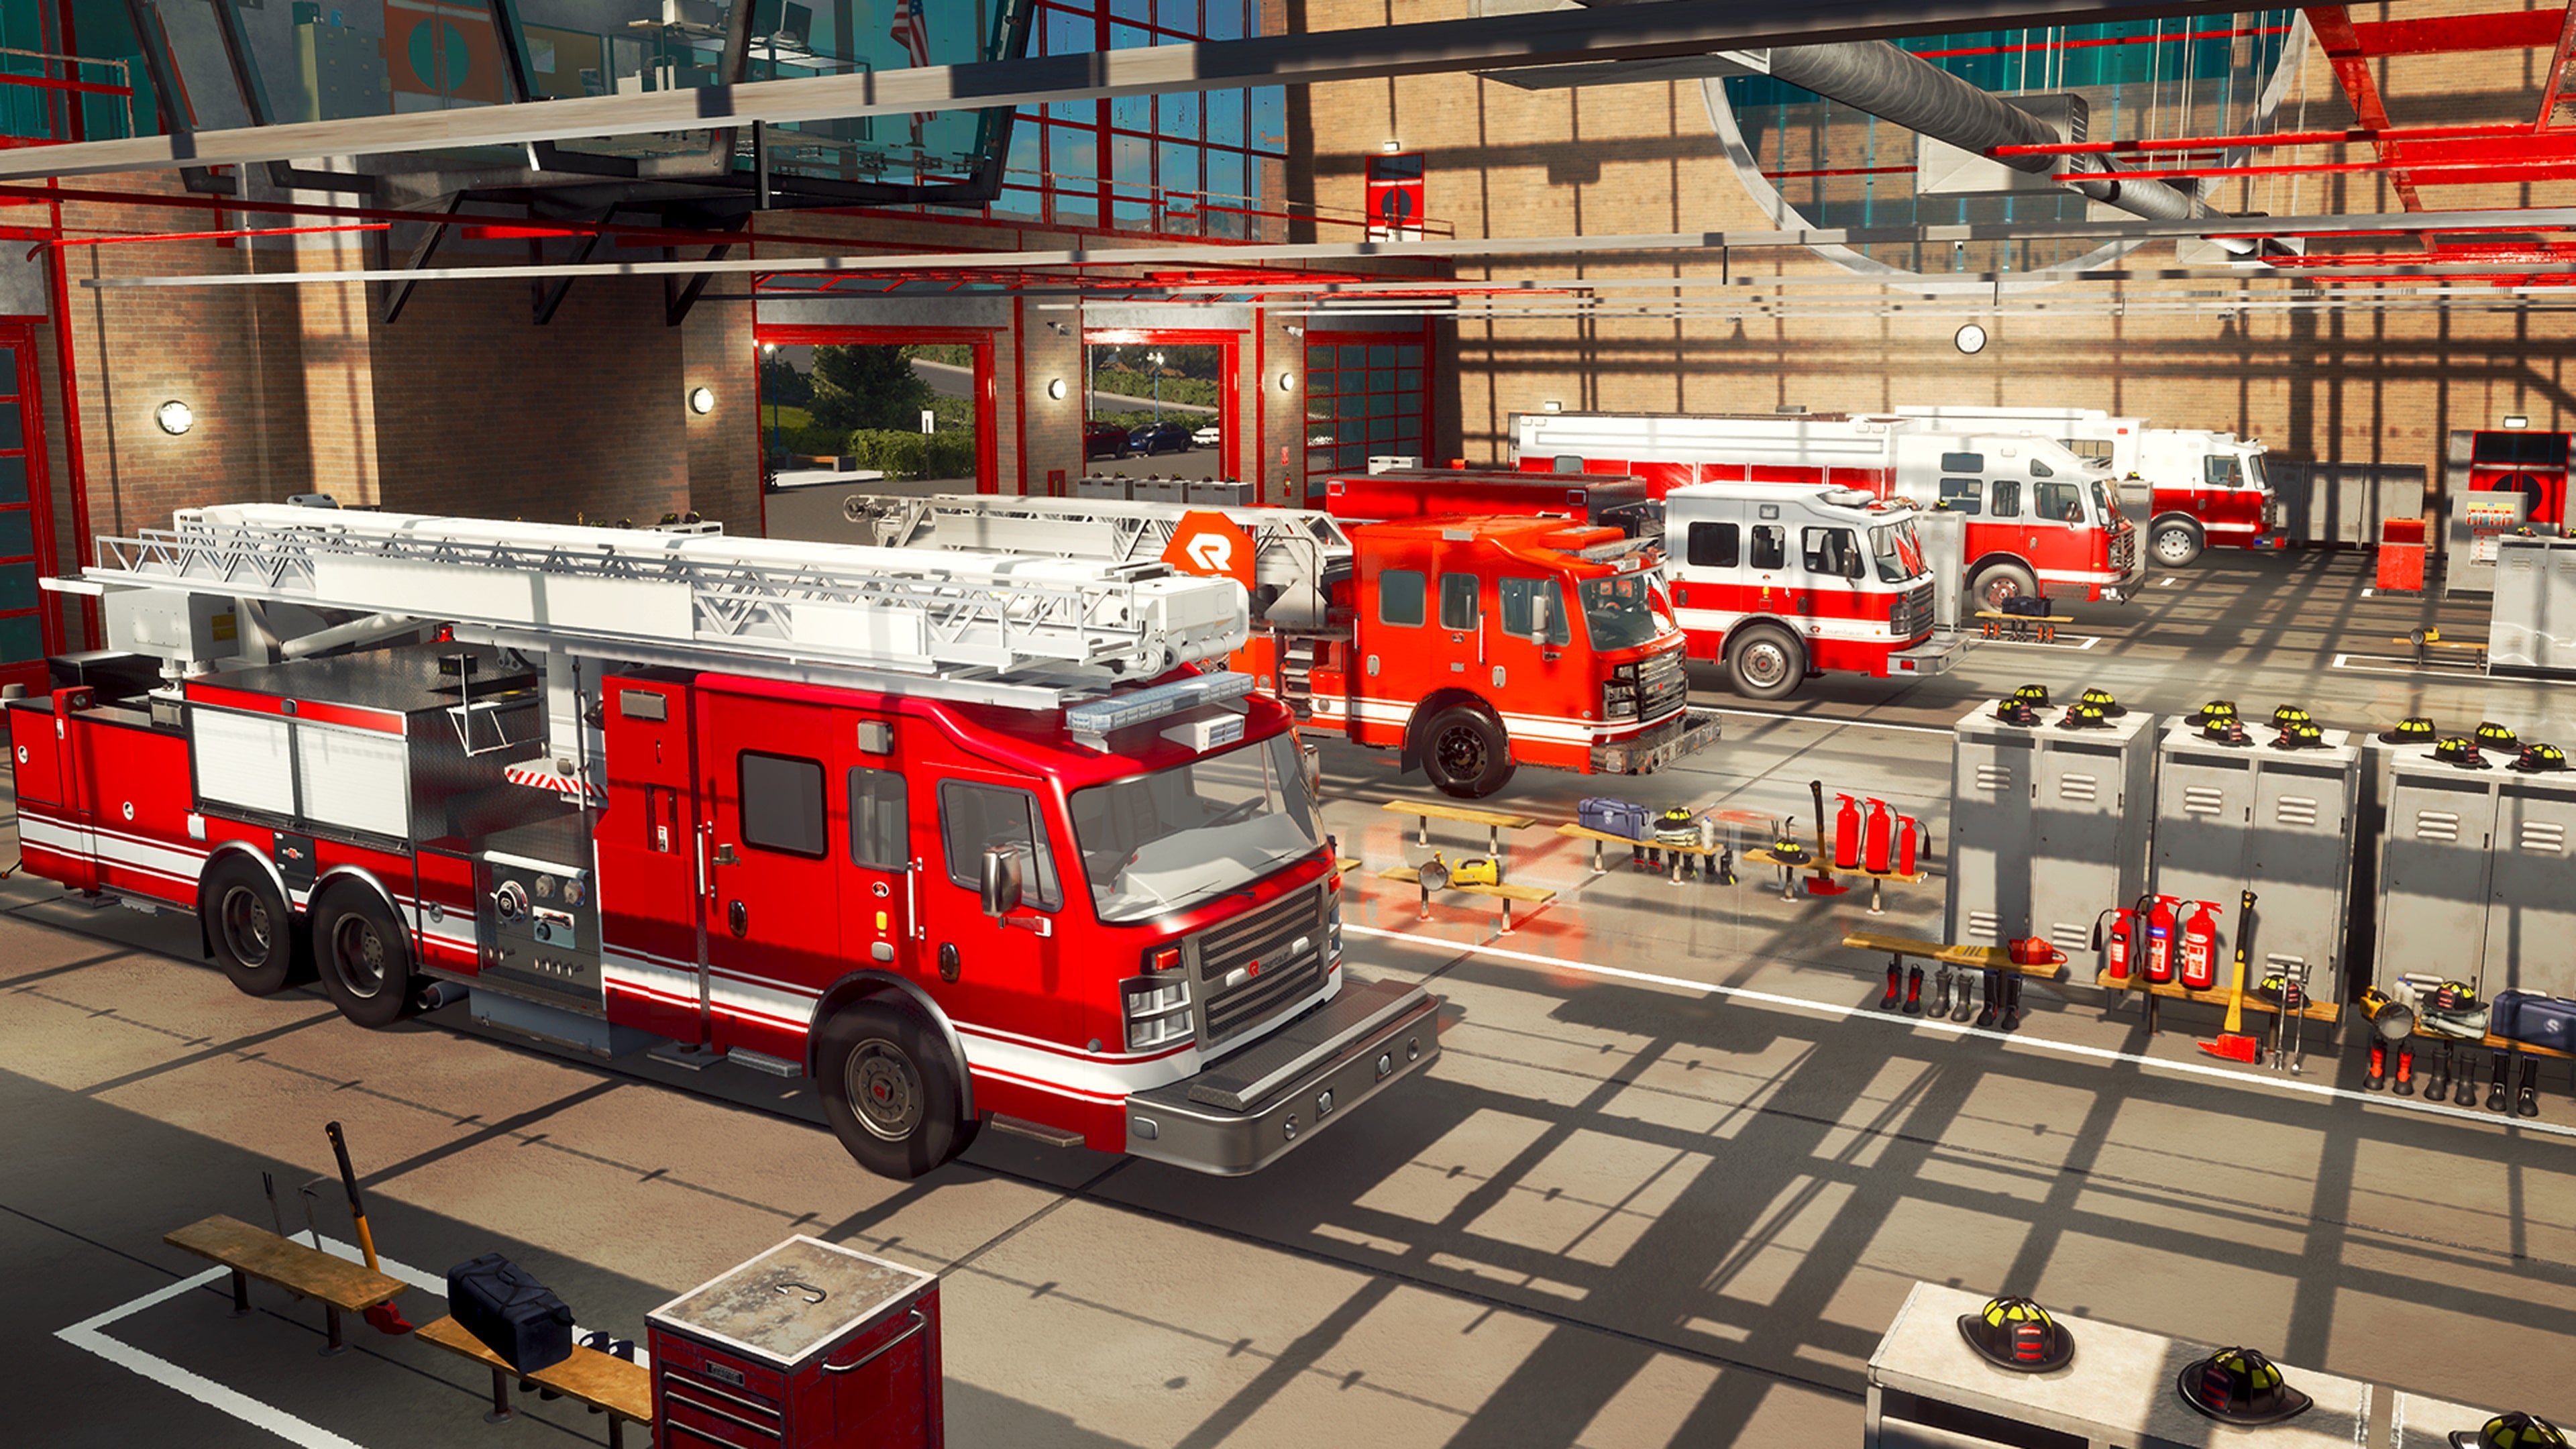 Игра симулятор пожарного. Игра Firefighting. Симулятор пожарного. Plant Fire Department - the Simulation. Firefighters 2014 игра.